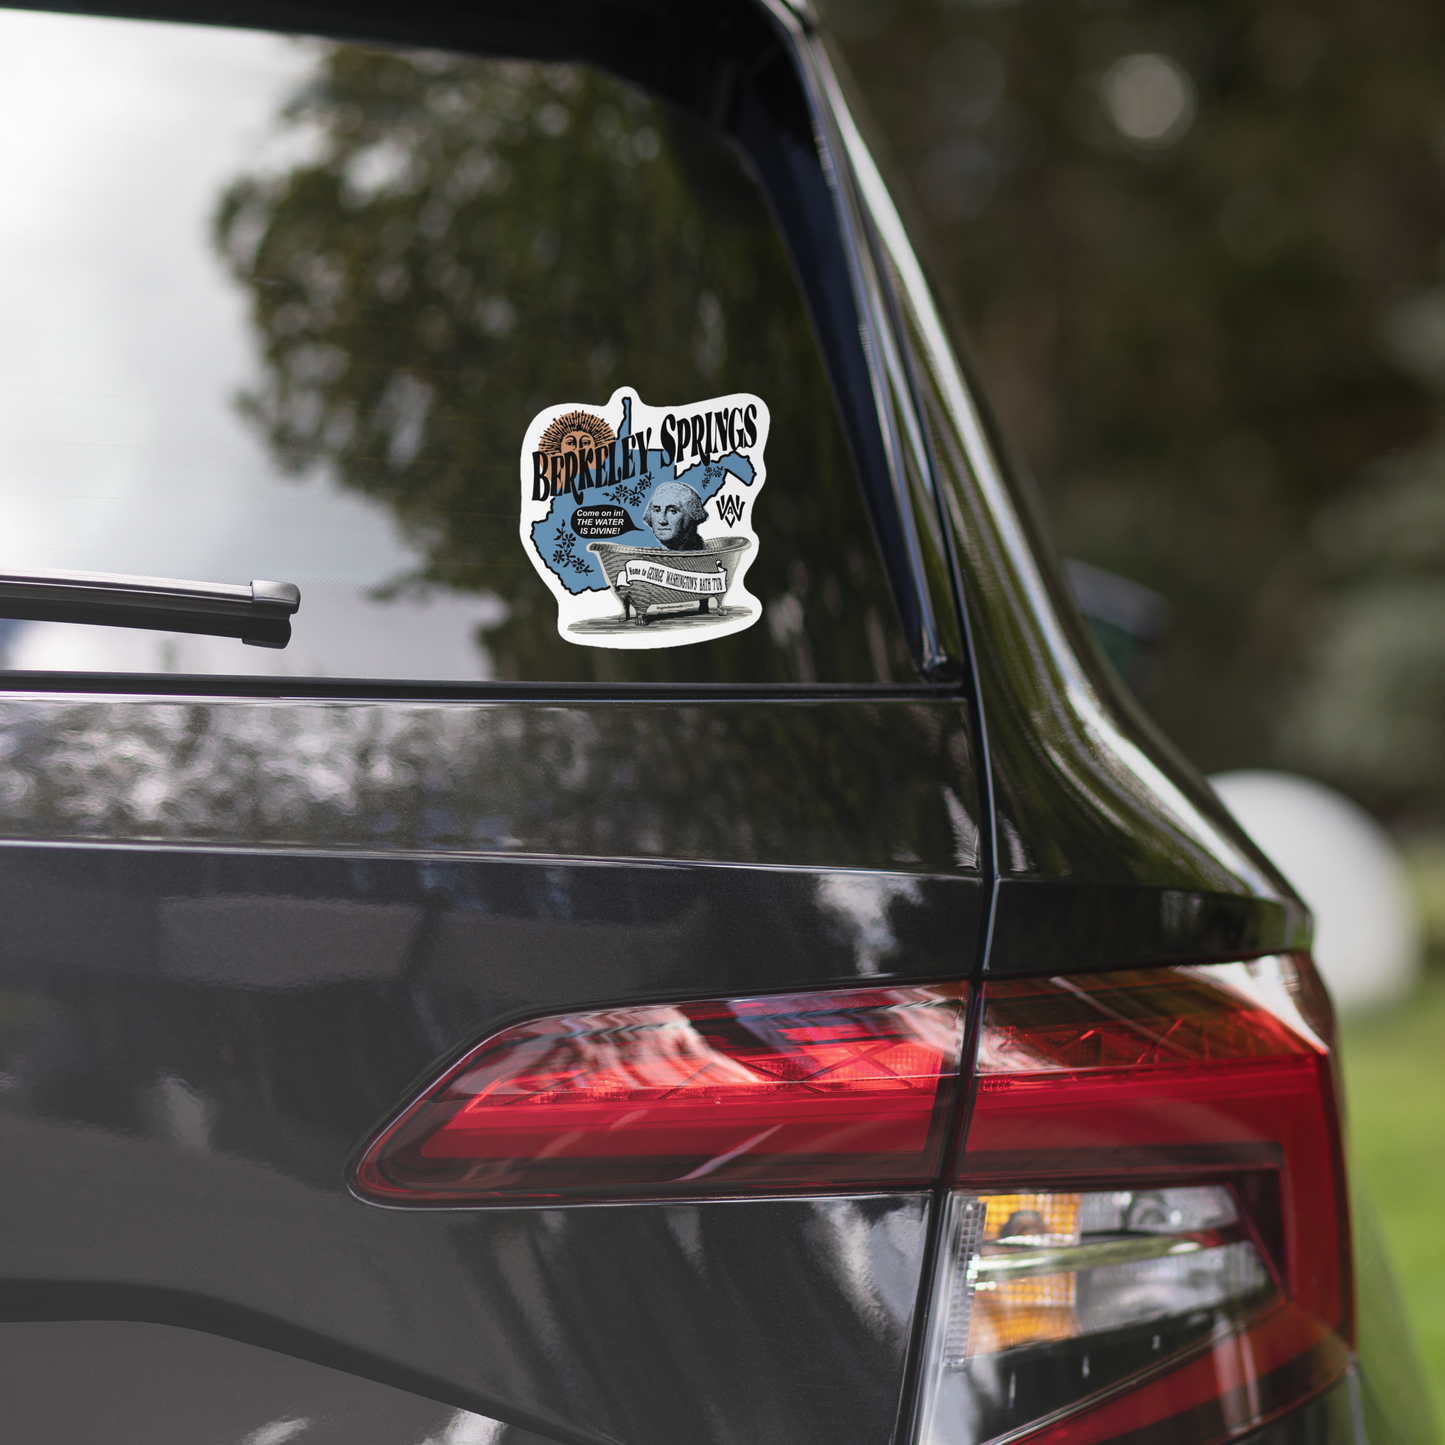 berkeley springs 5.5" bumper sticker displayed on rear car window